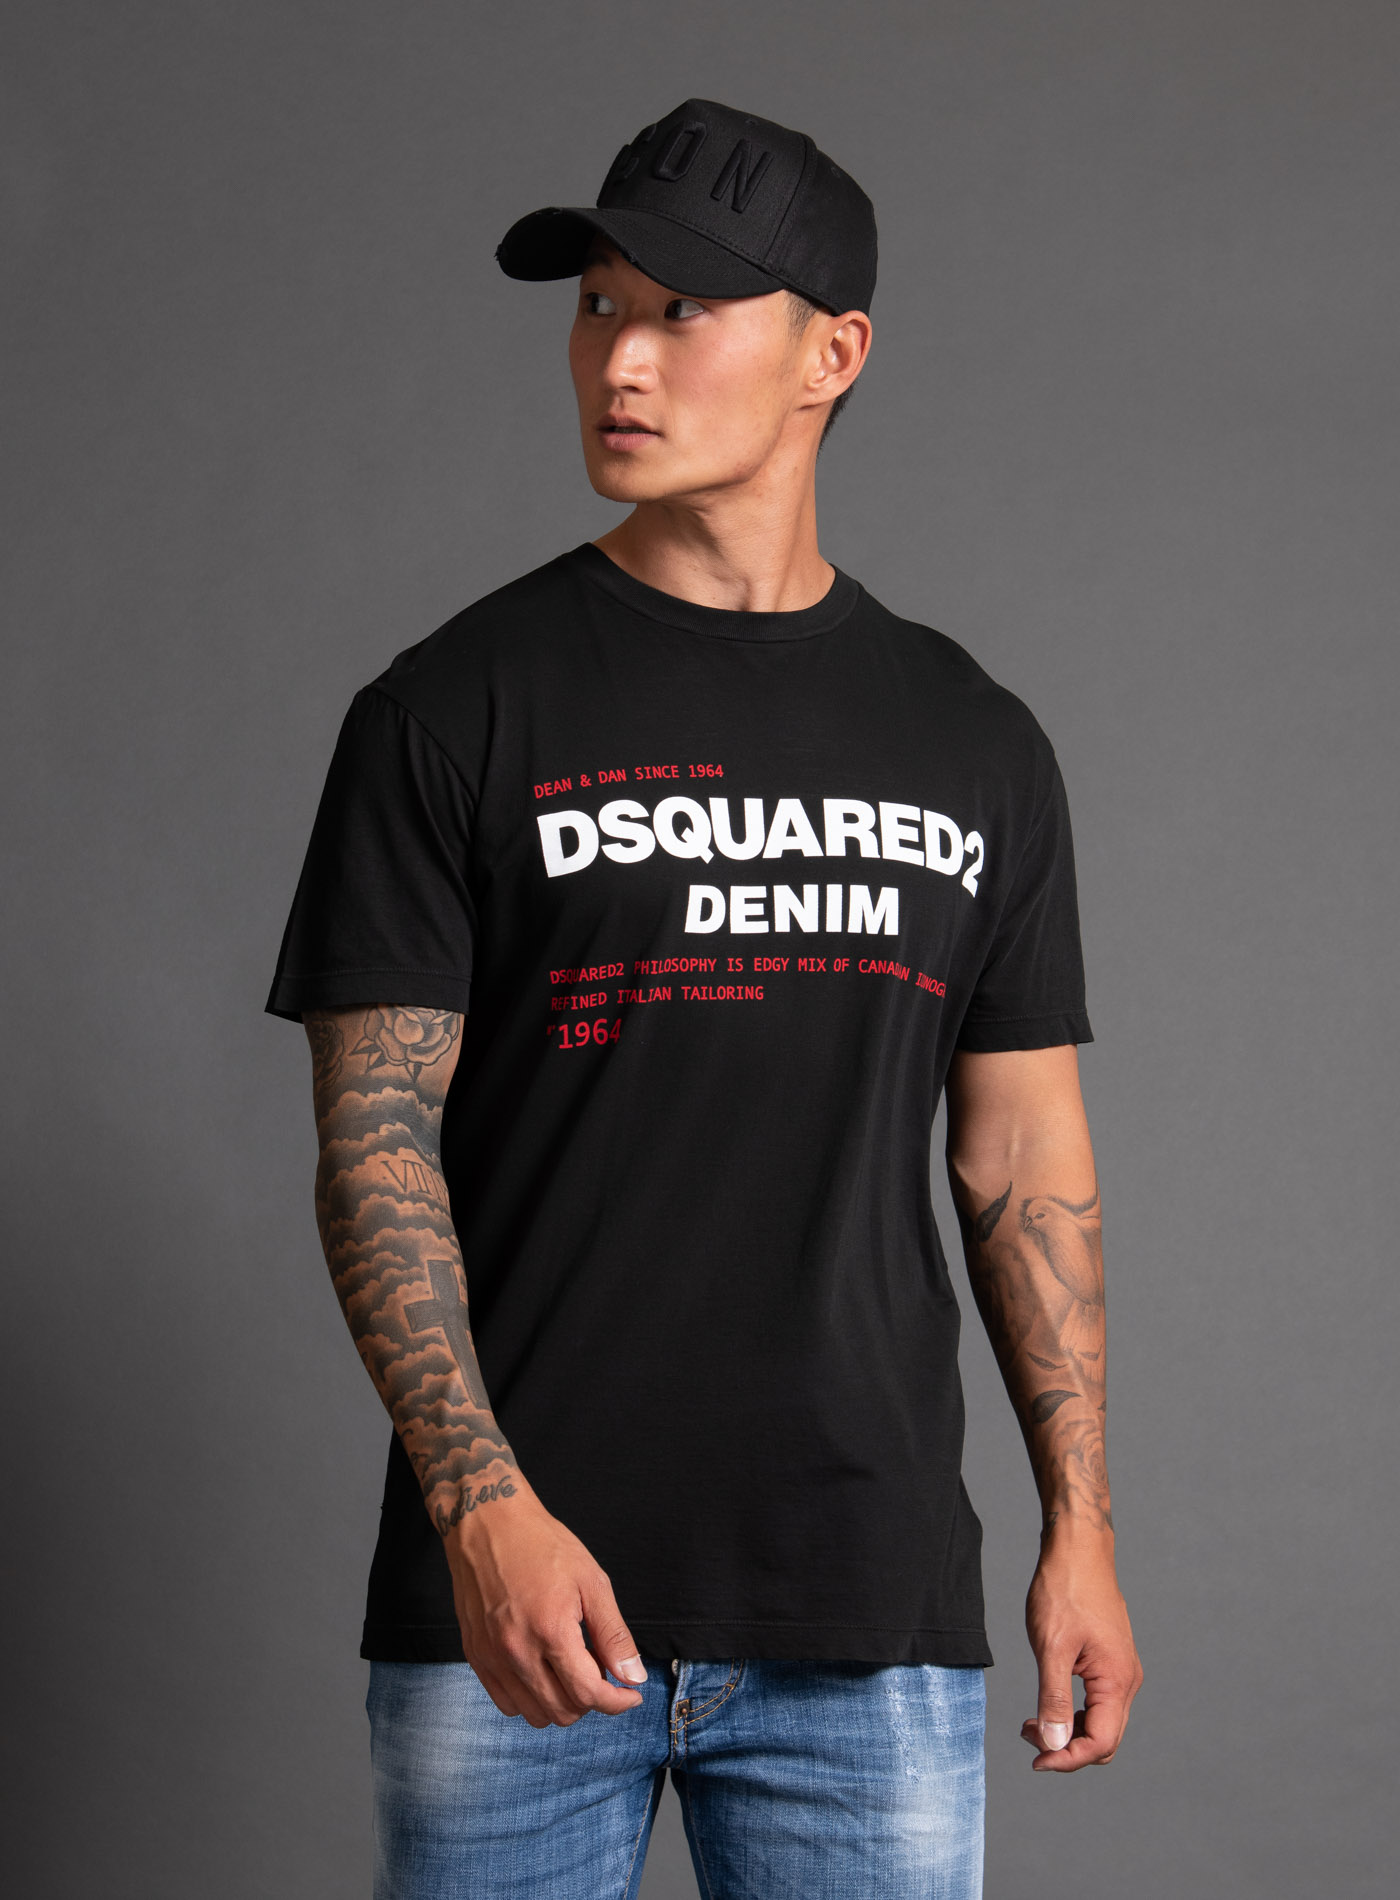 DSQUARED2 חולצות - DSQUARED2 T-SHIRT - חנות מותגים אונליין לבגדי מותגים